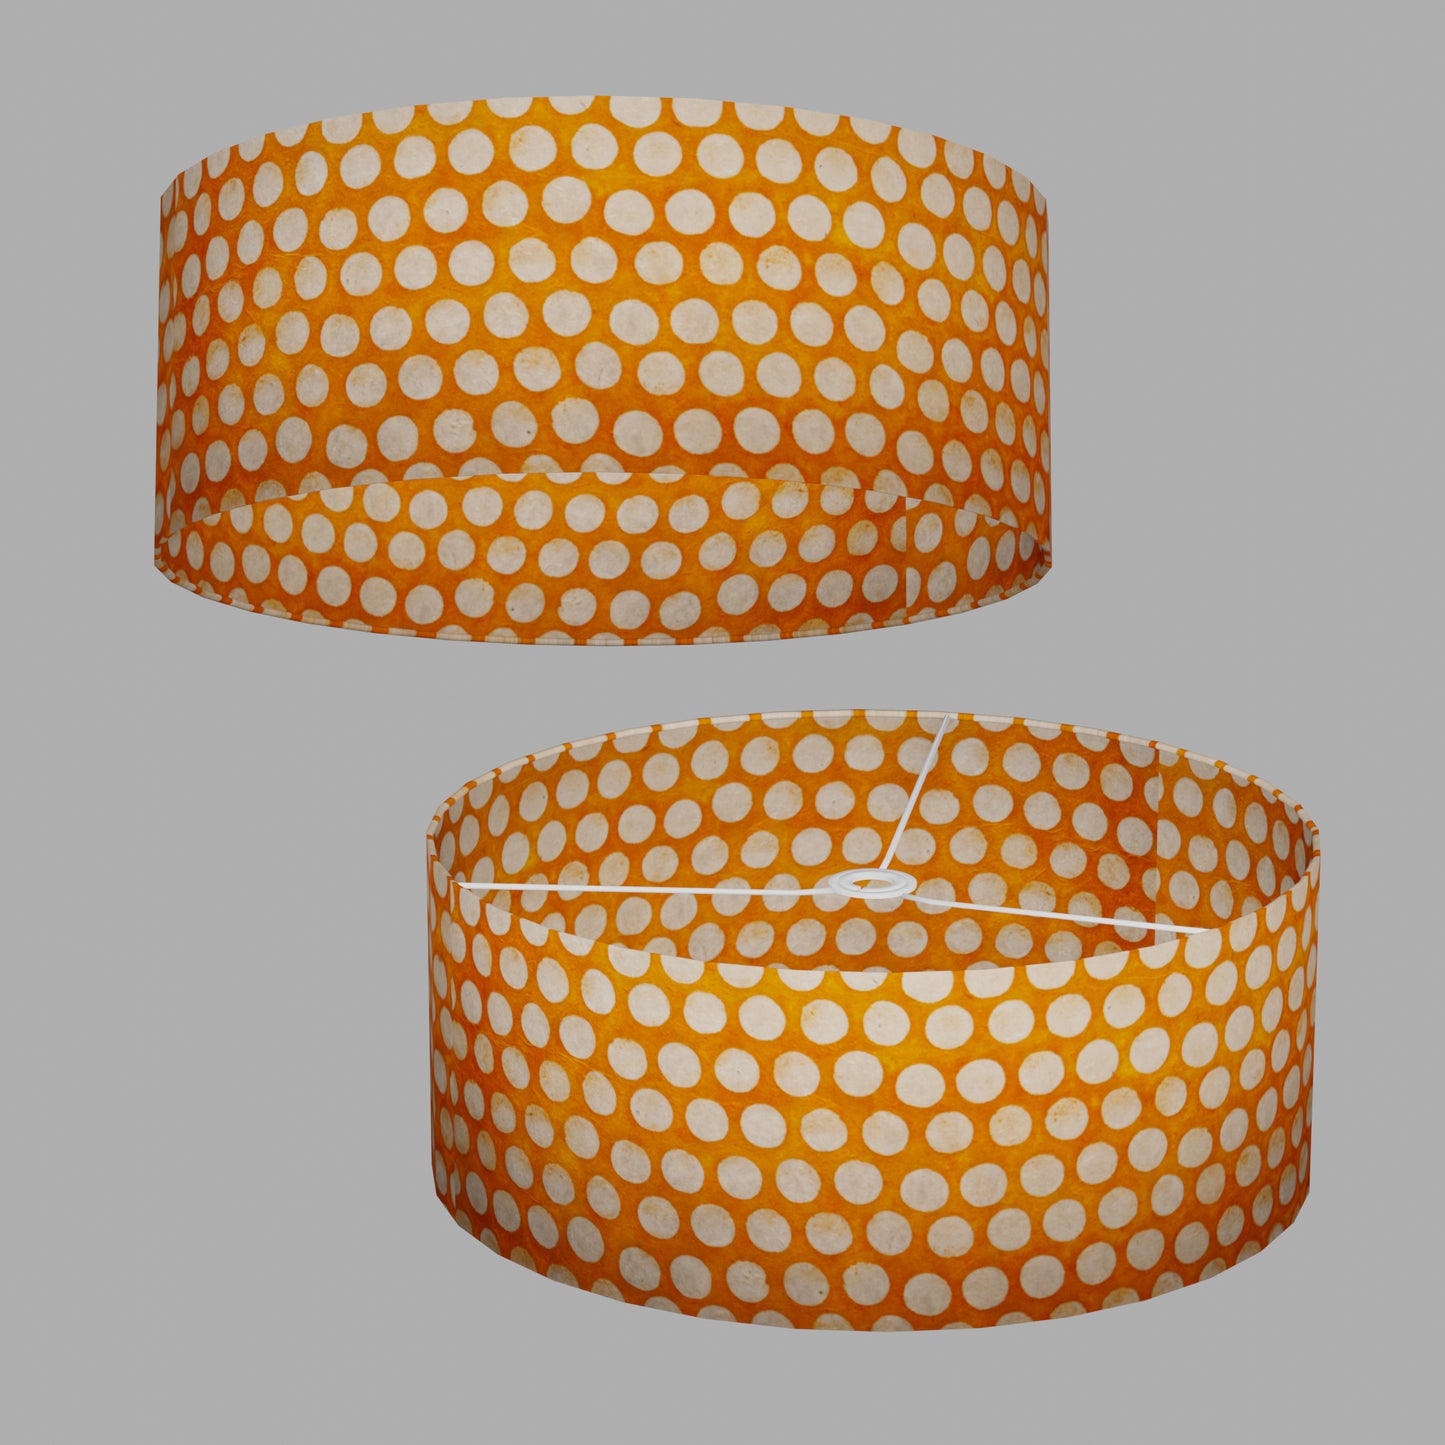 Drum Lamp Shade - B110 ~ Batik Dots on Orange, 50cm(d) x 20cm(h)